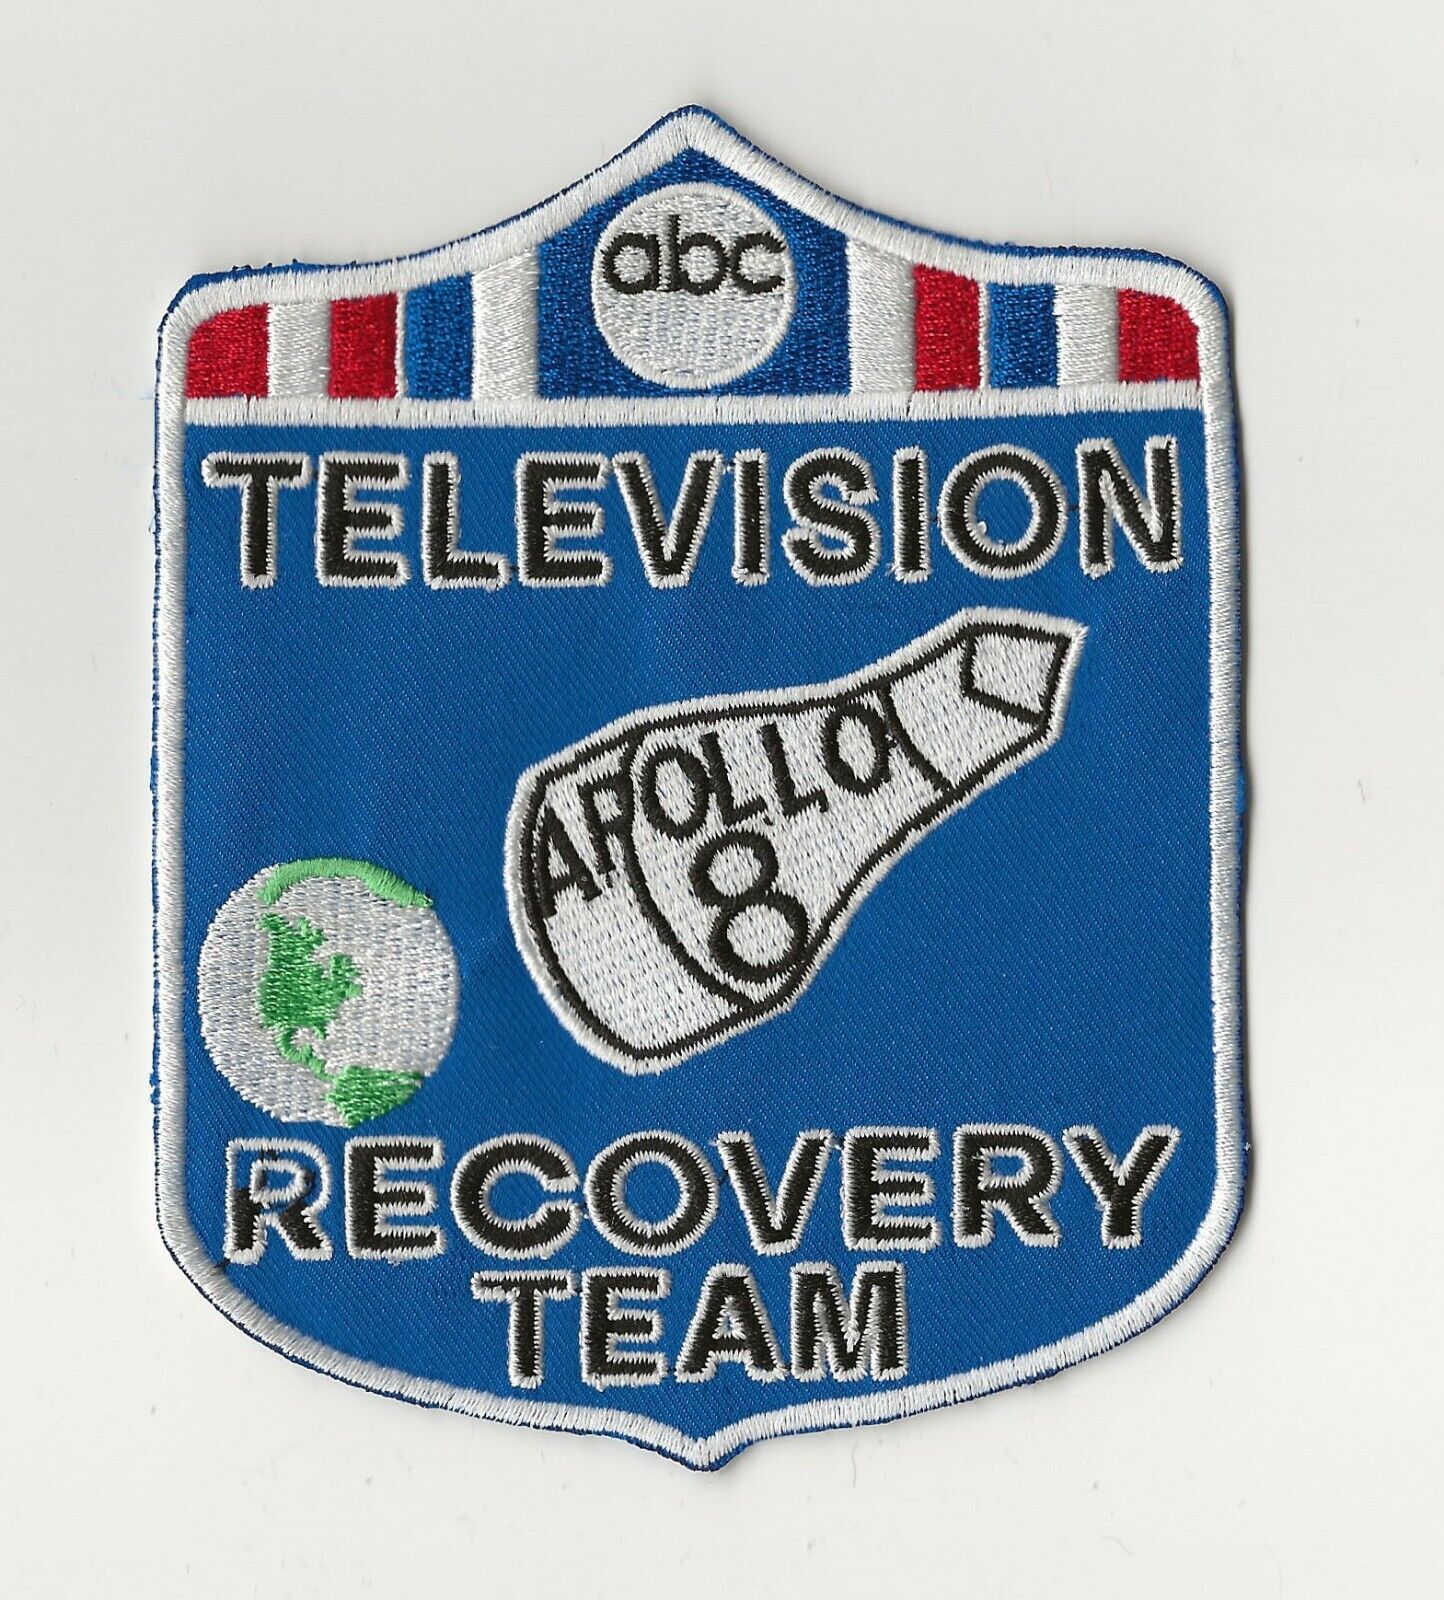 ABC News Apollo 8 Television Recovery Team correspondent NASA space patch